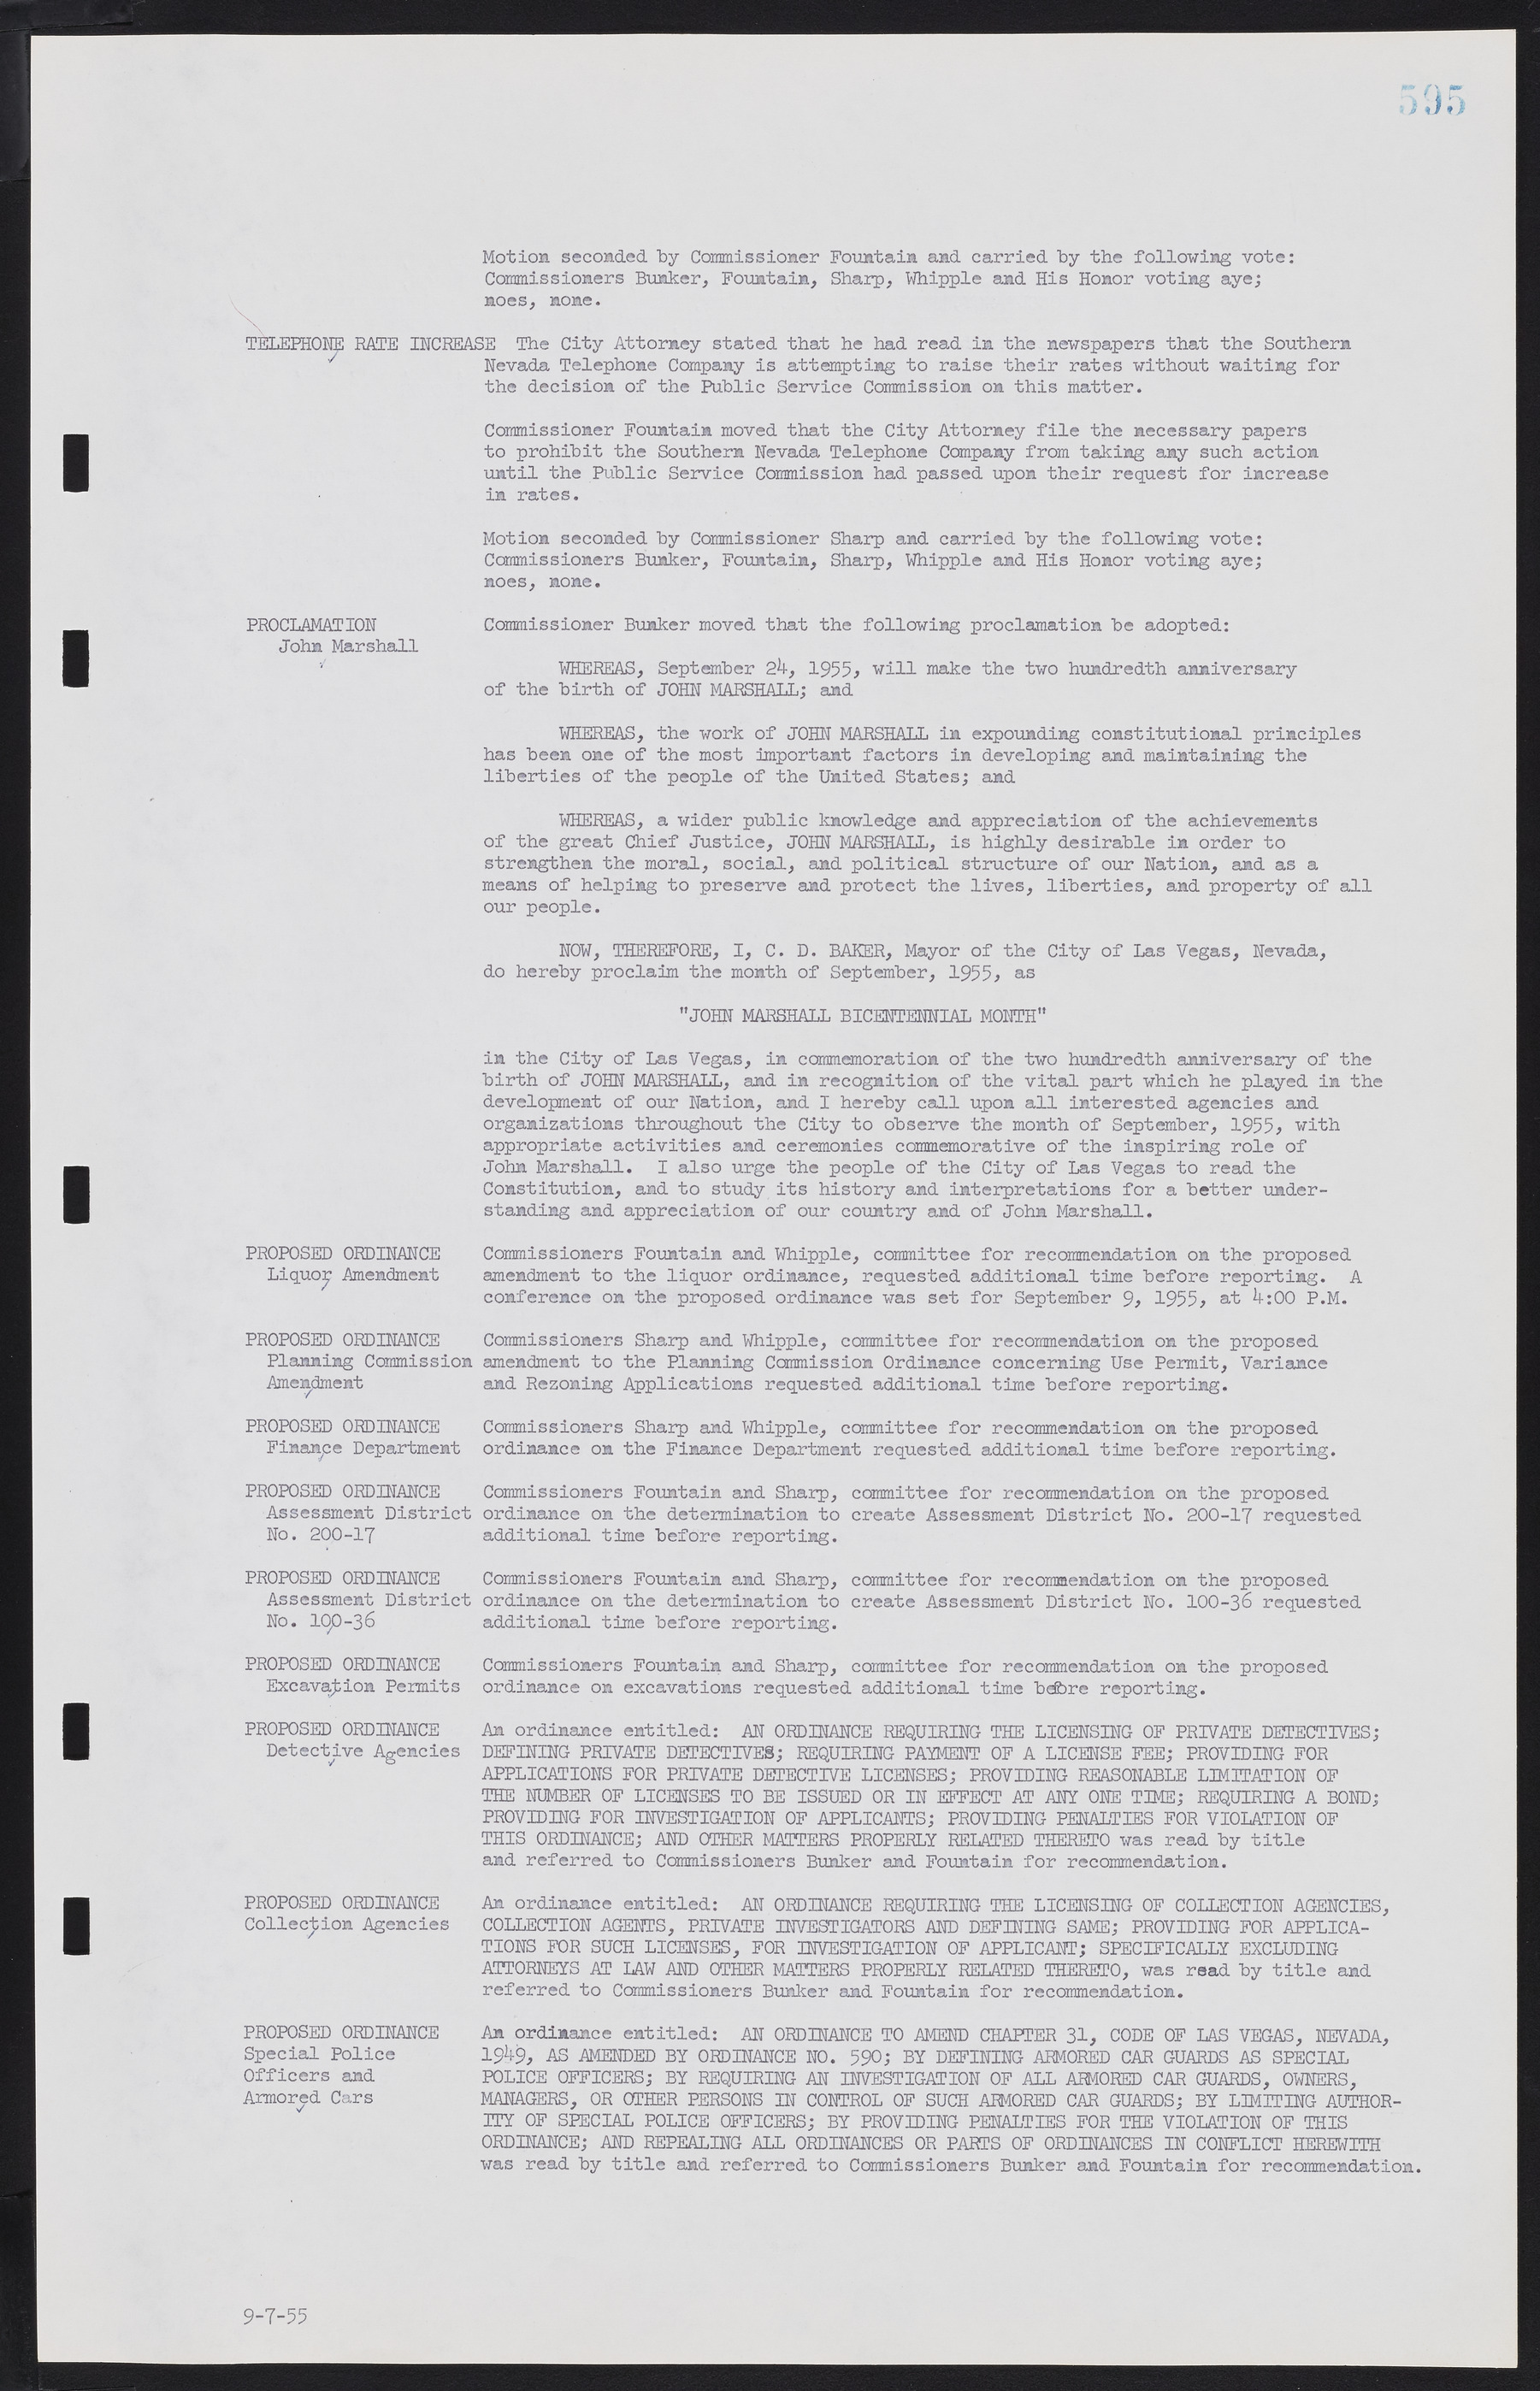 Las Vegas City Commission Minutes, February 17, 1954 to September 21, 1955, lvc000009-601